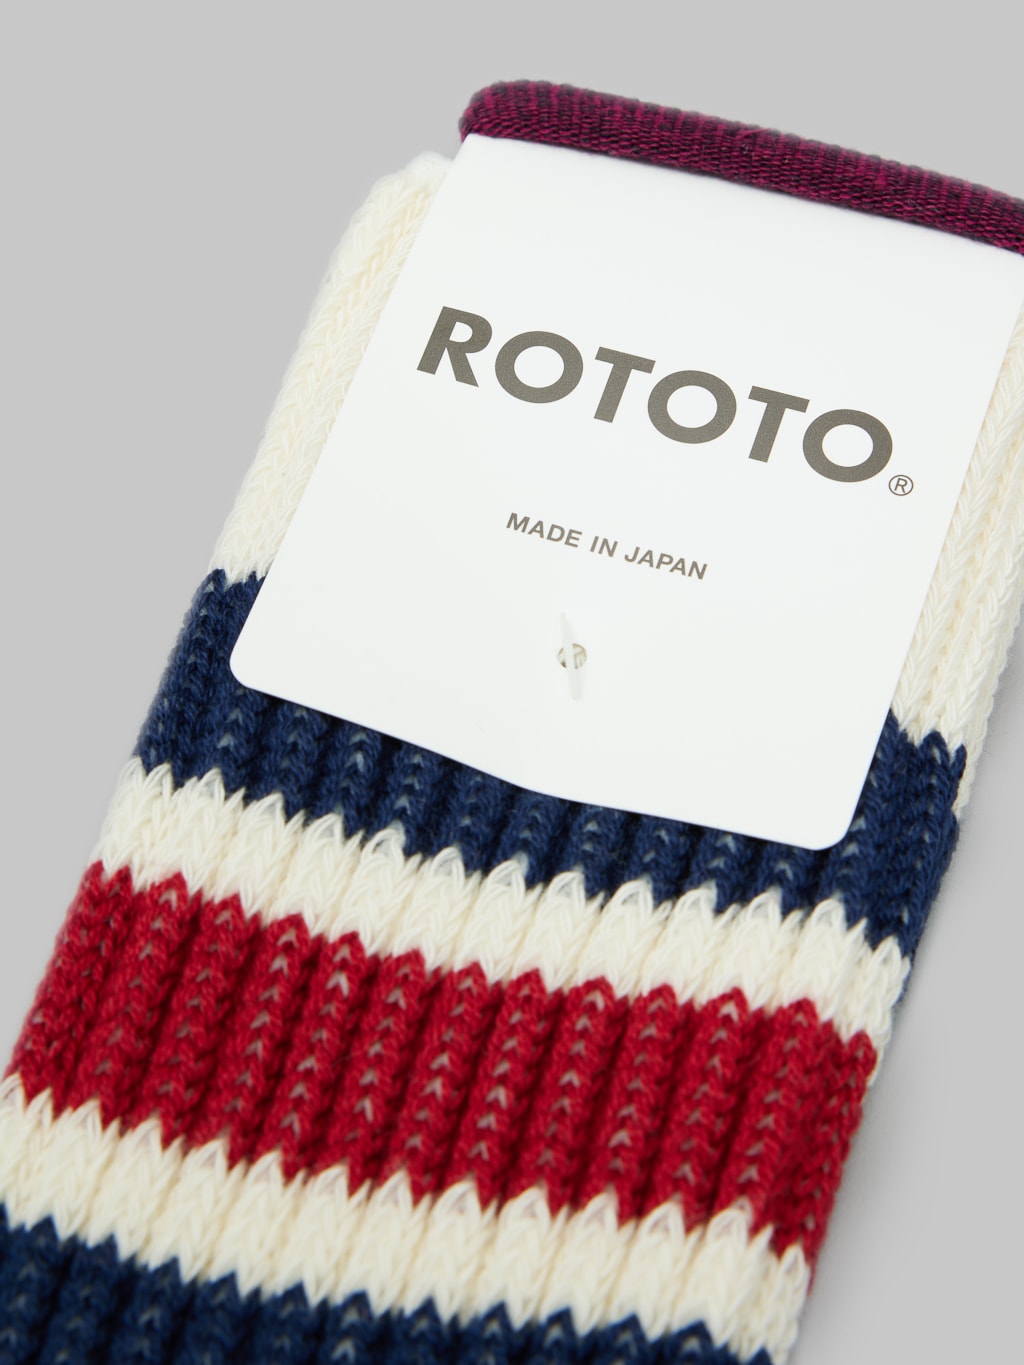 rototo oldschool crew socks navy dark red brand label